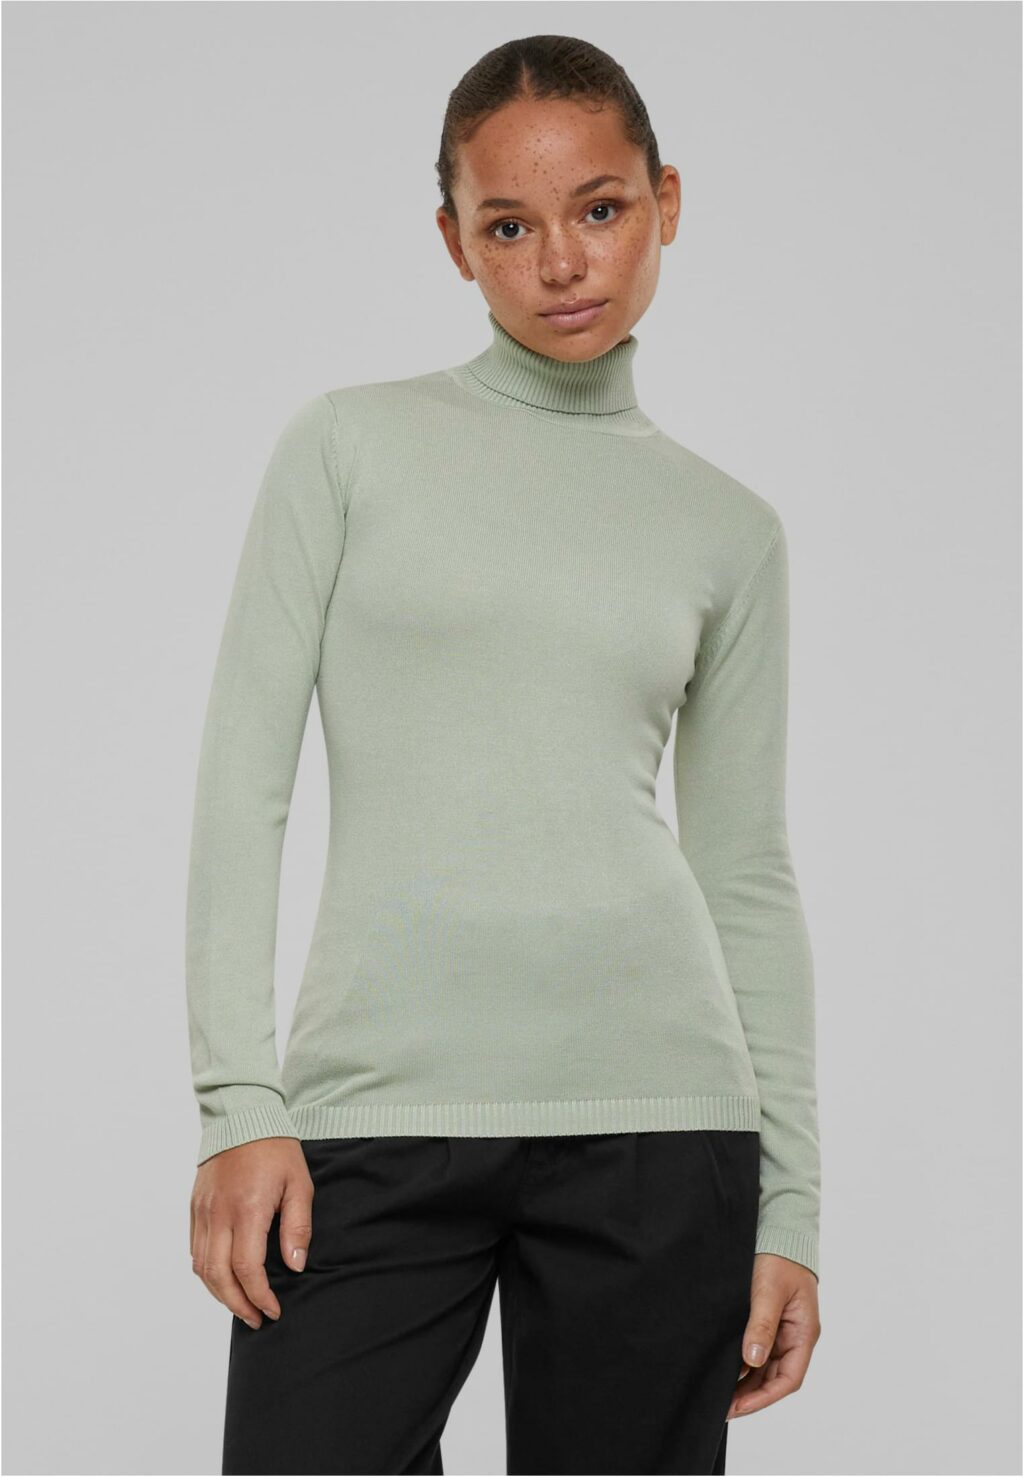 Urban Classics Ladies Knitted Turtleneck Sweater softsalvia TB6115